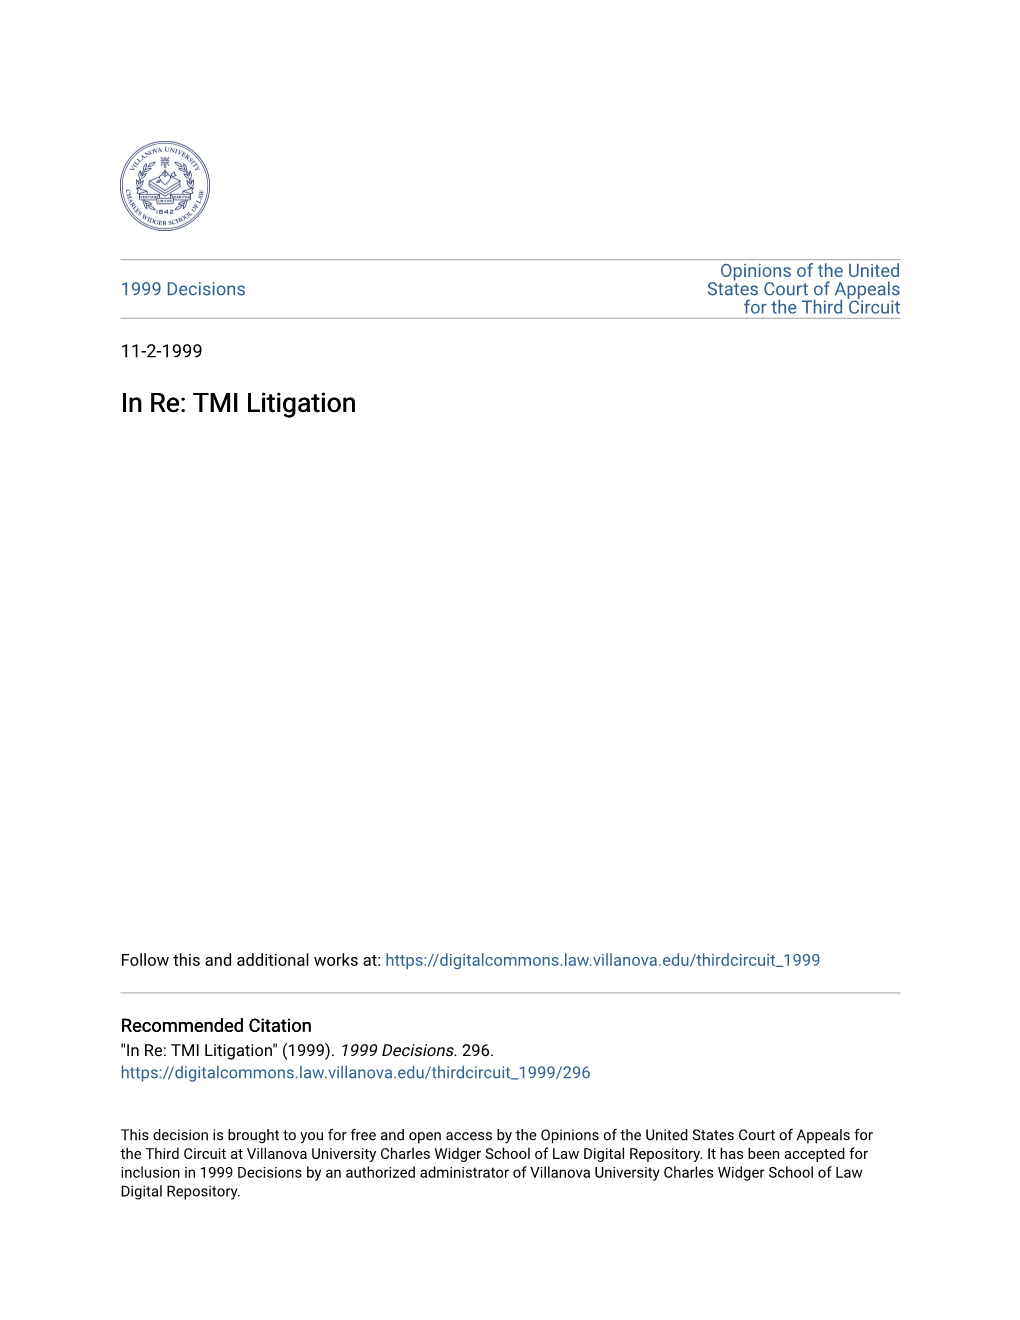 In Re: TMI Litigation